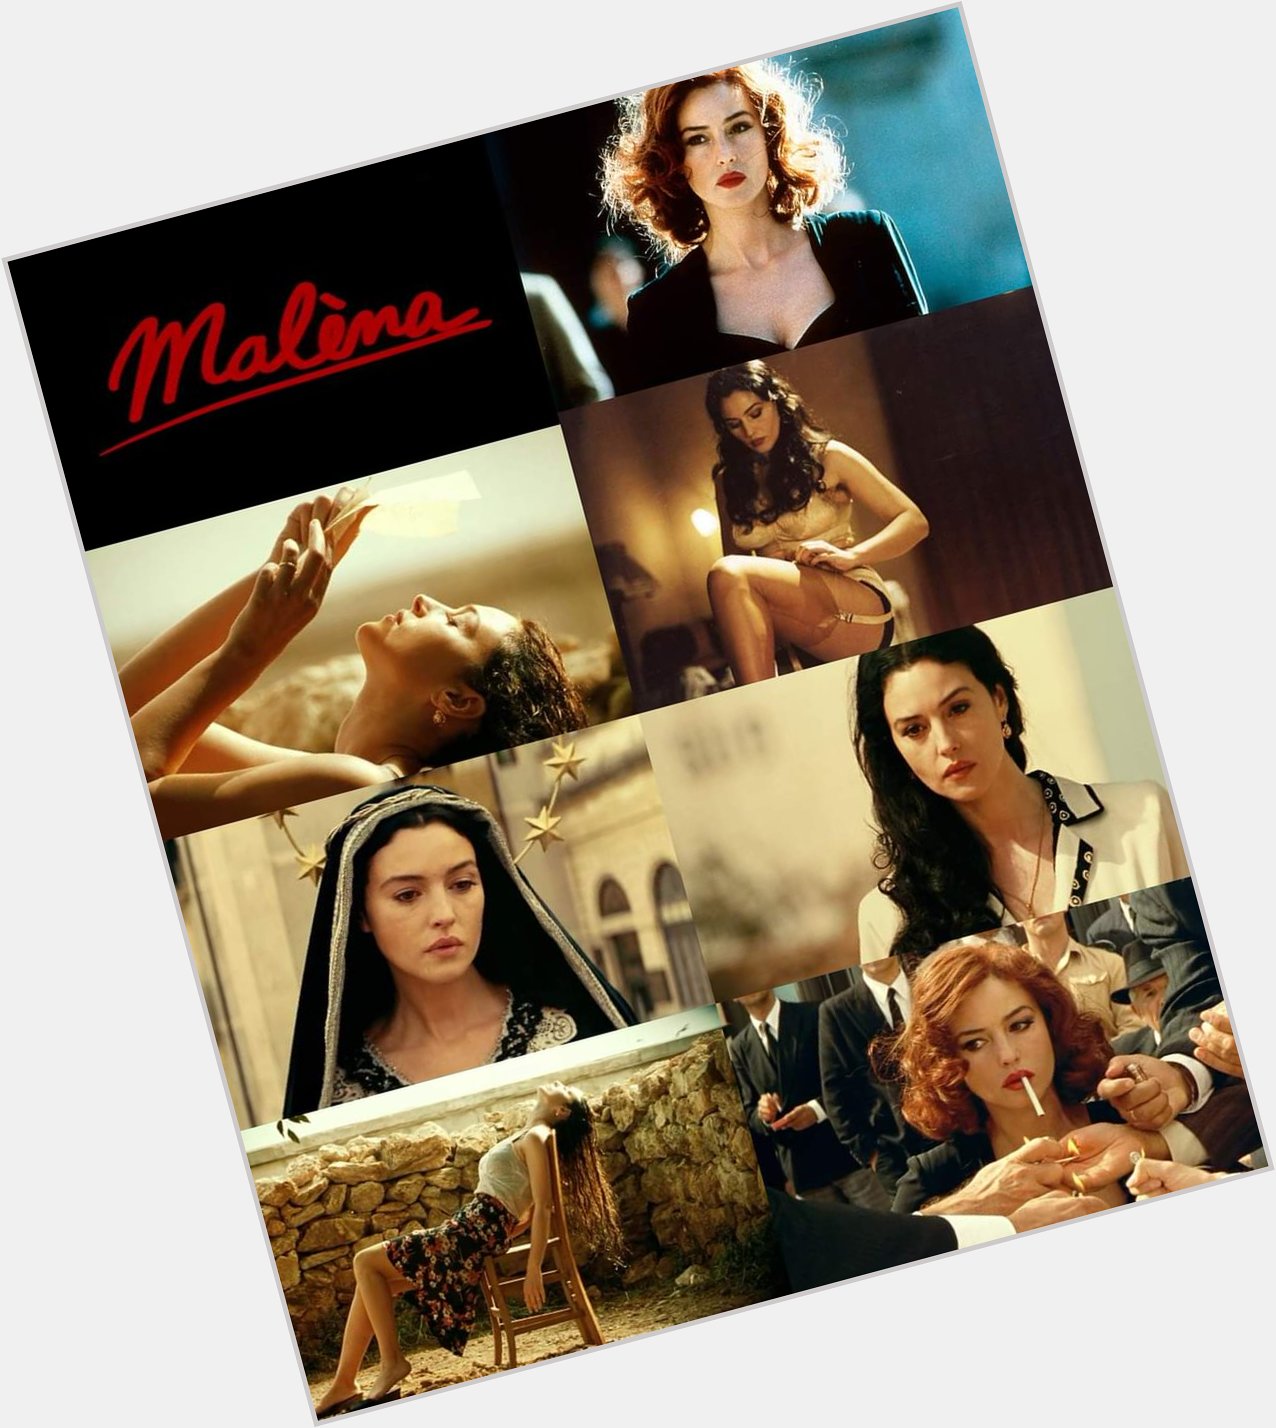   | Monica Bellucci as Malena Scordia, Malèna (2000)
Happy birthday to the Italian actress 